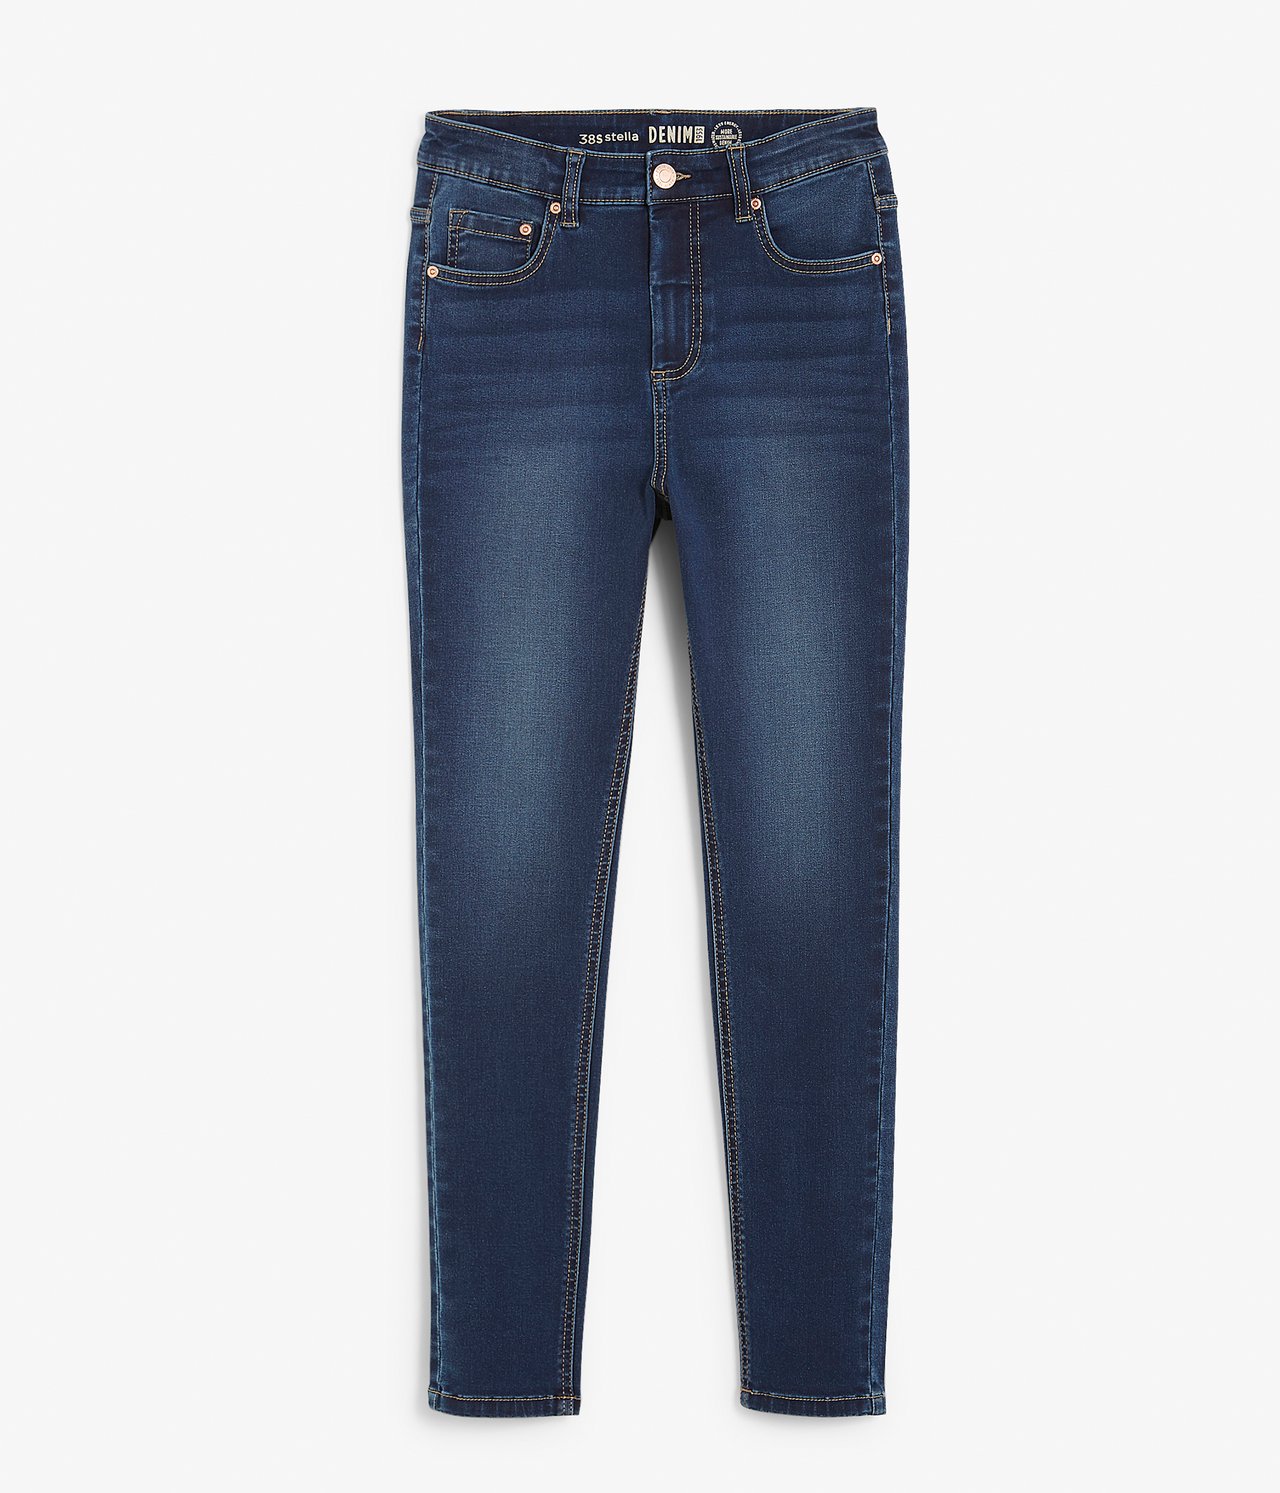 Super slim jeans short leg - Mörk denim - 5